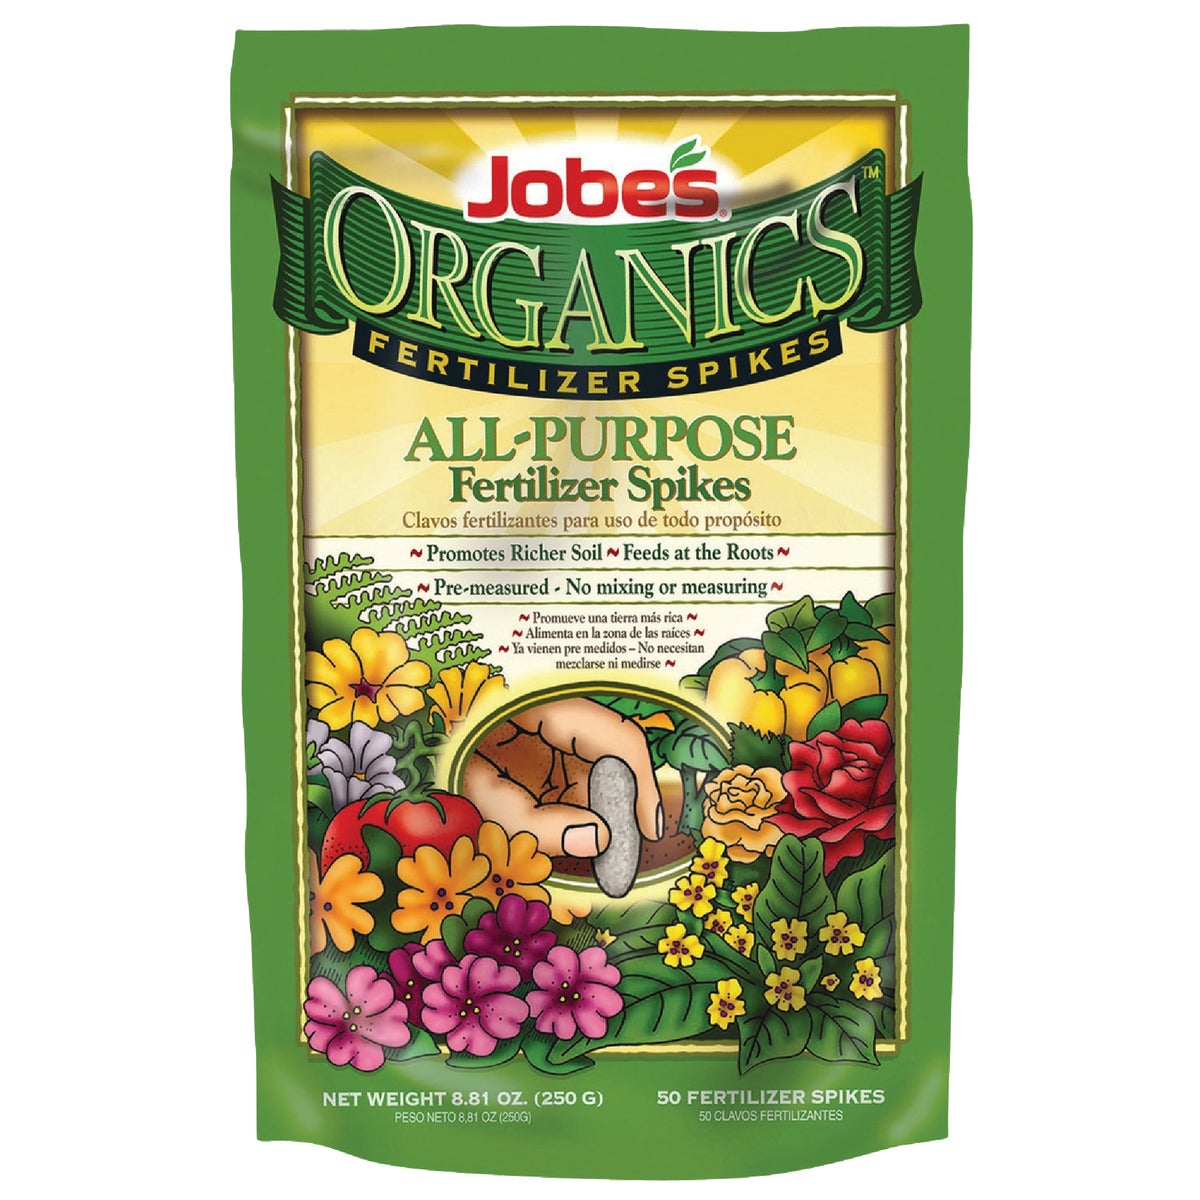 Jobe’s Organic All-Purpose Fertilizer Spikes